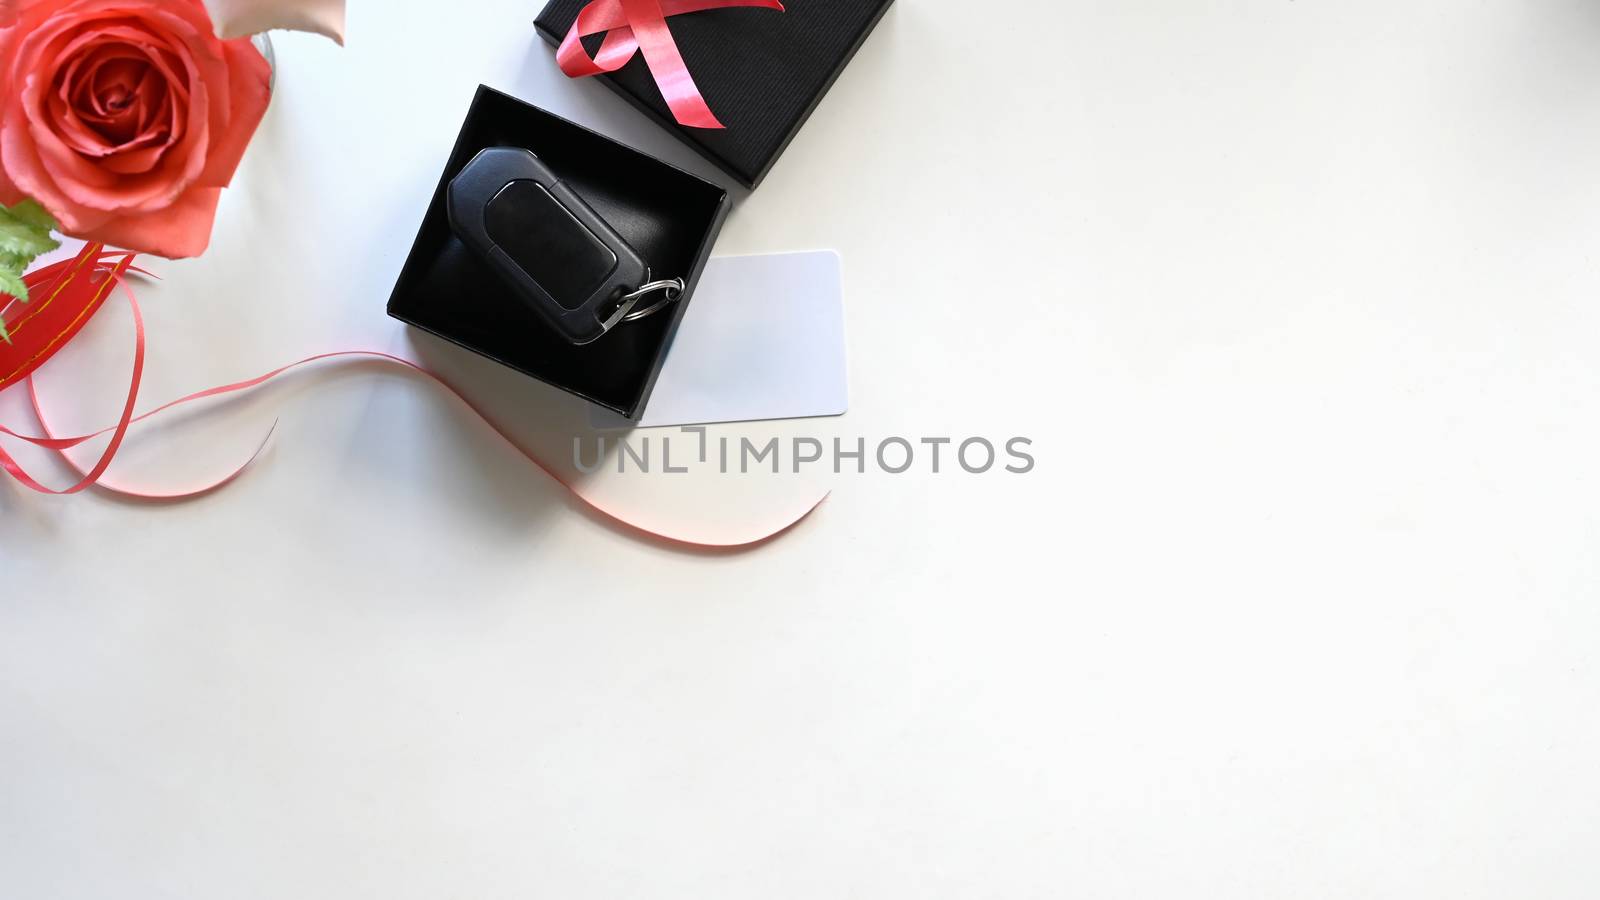 Top view Digital car key putting inside the black gift box with  by prathanchorruangsak